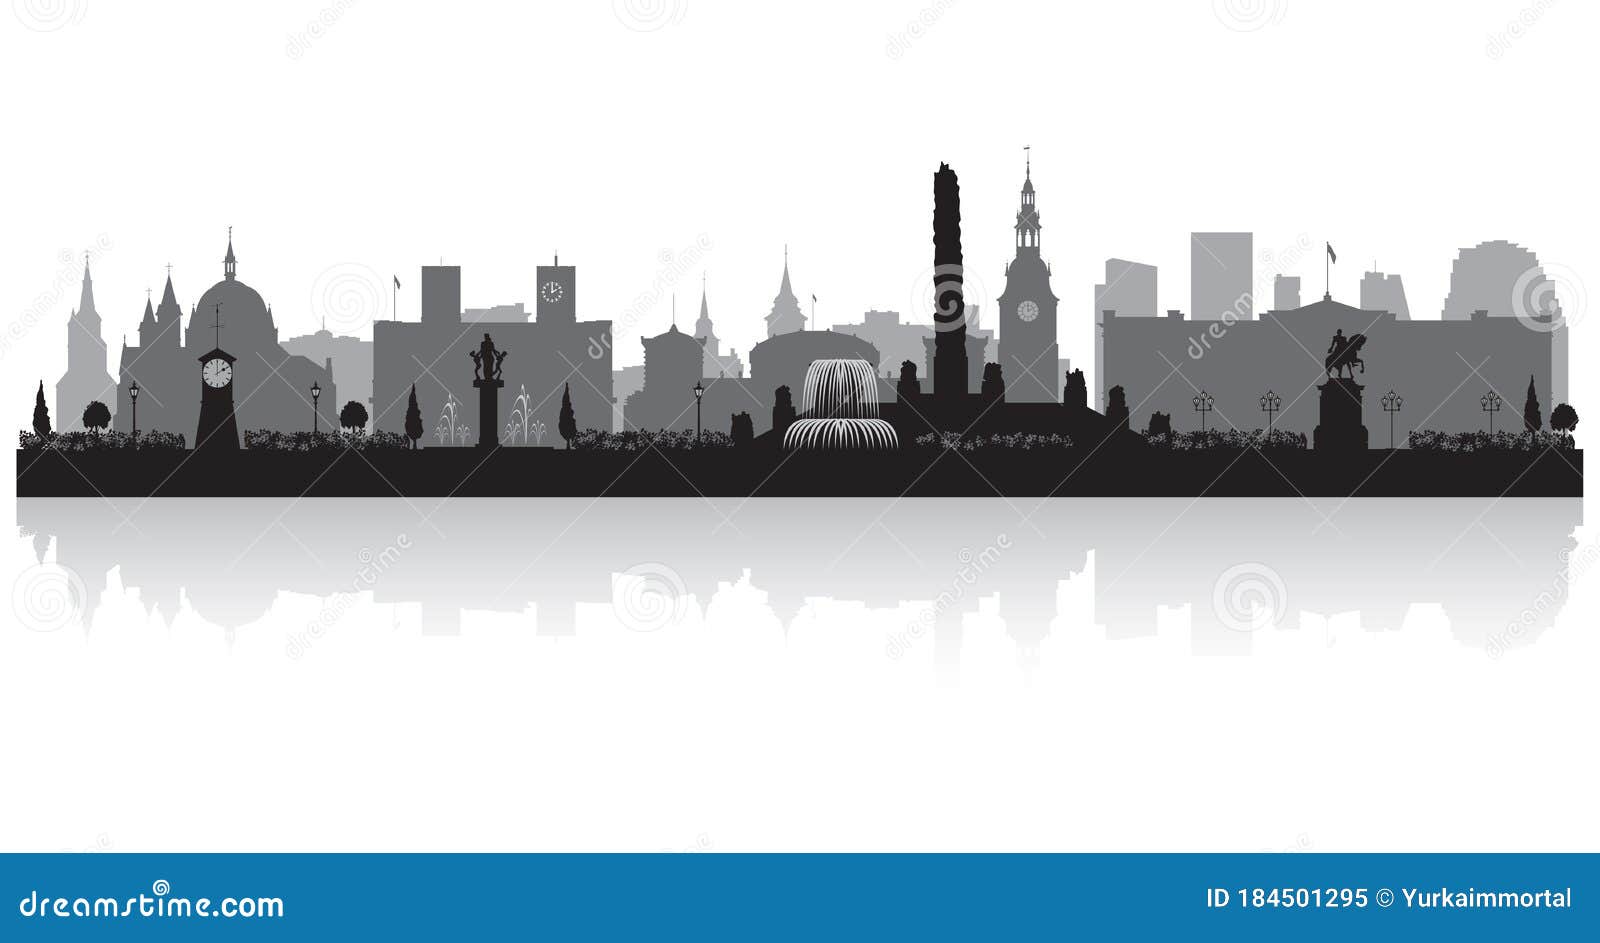 oslo norway city skyline silhouette